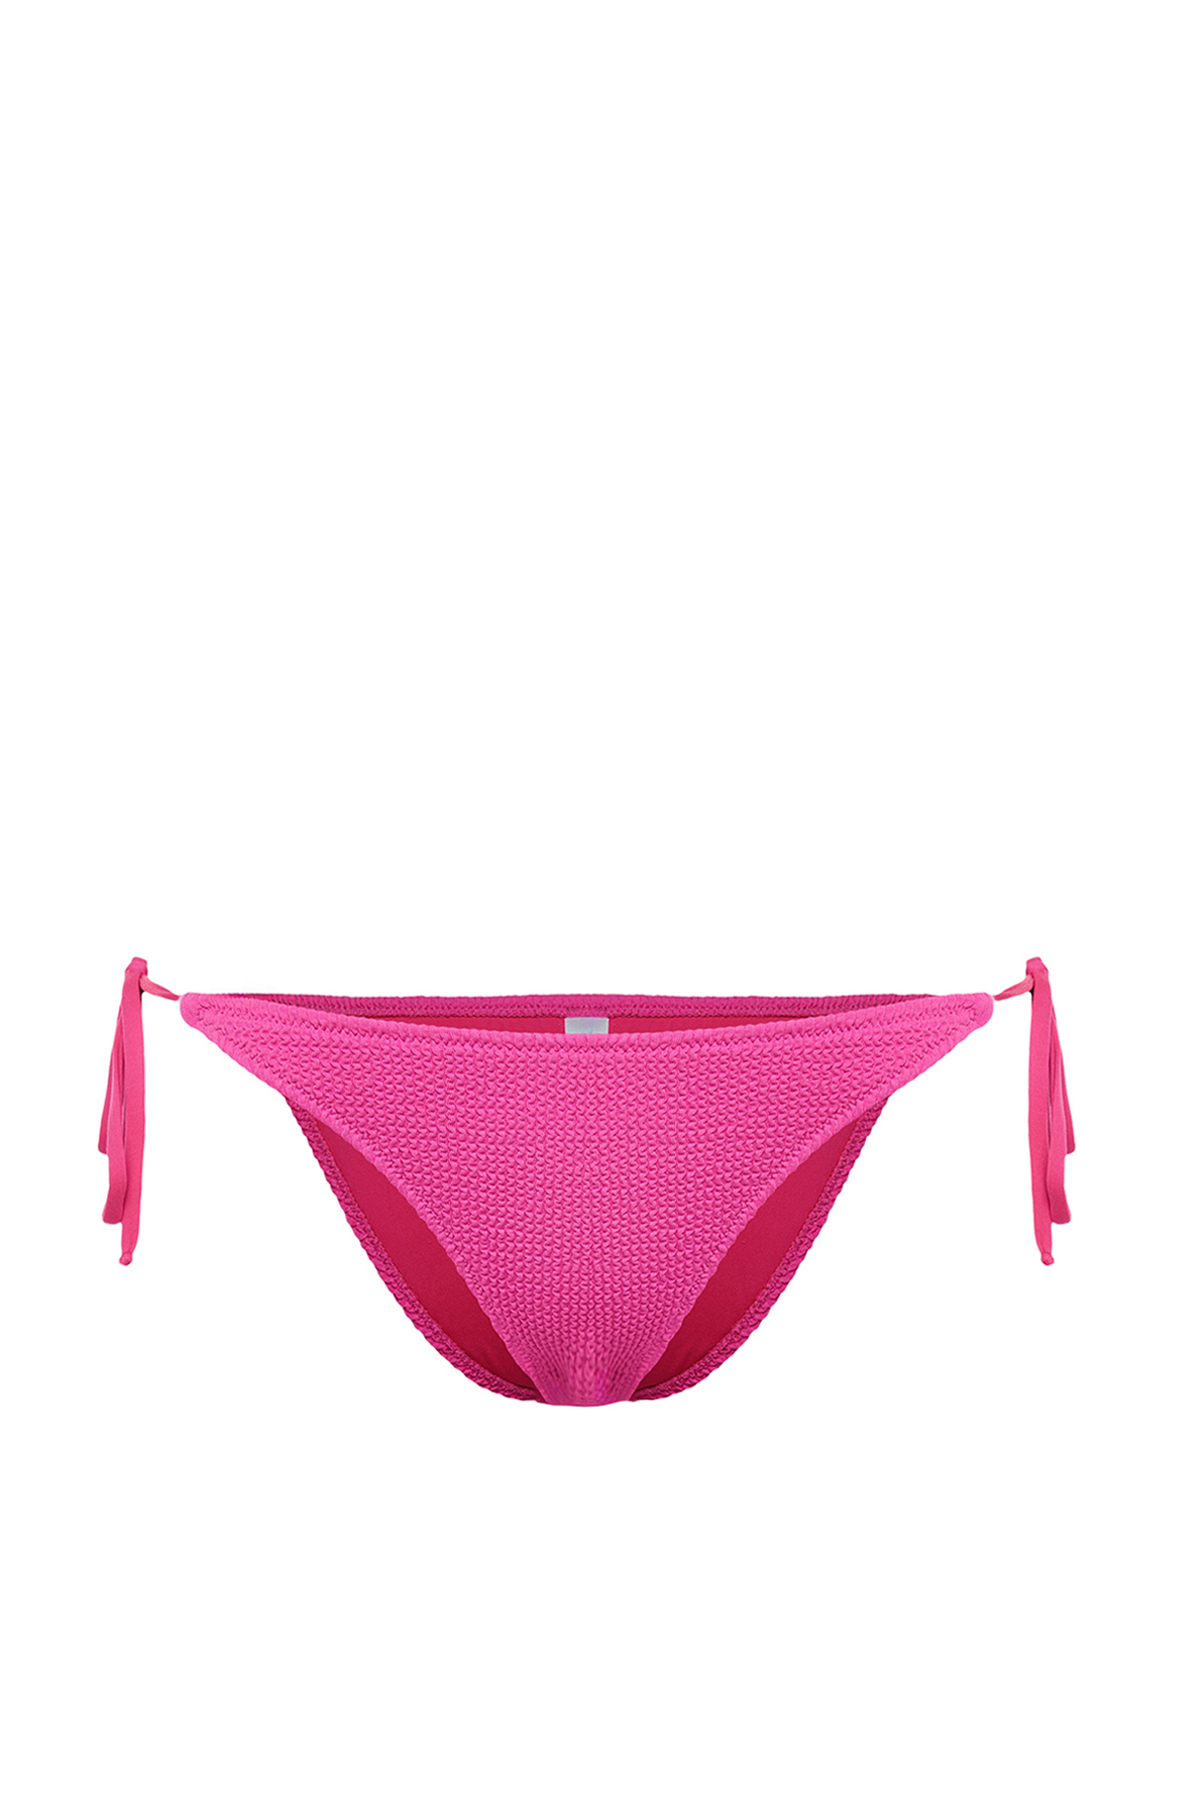 Trendyol Pink Tie-Up Textured Bikini Bottom